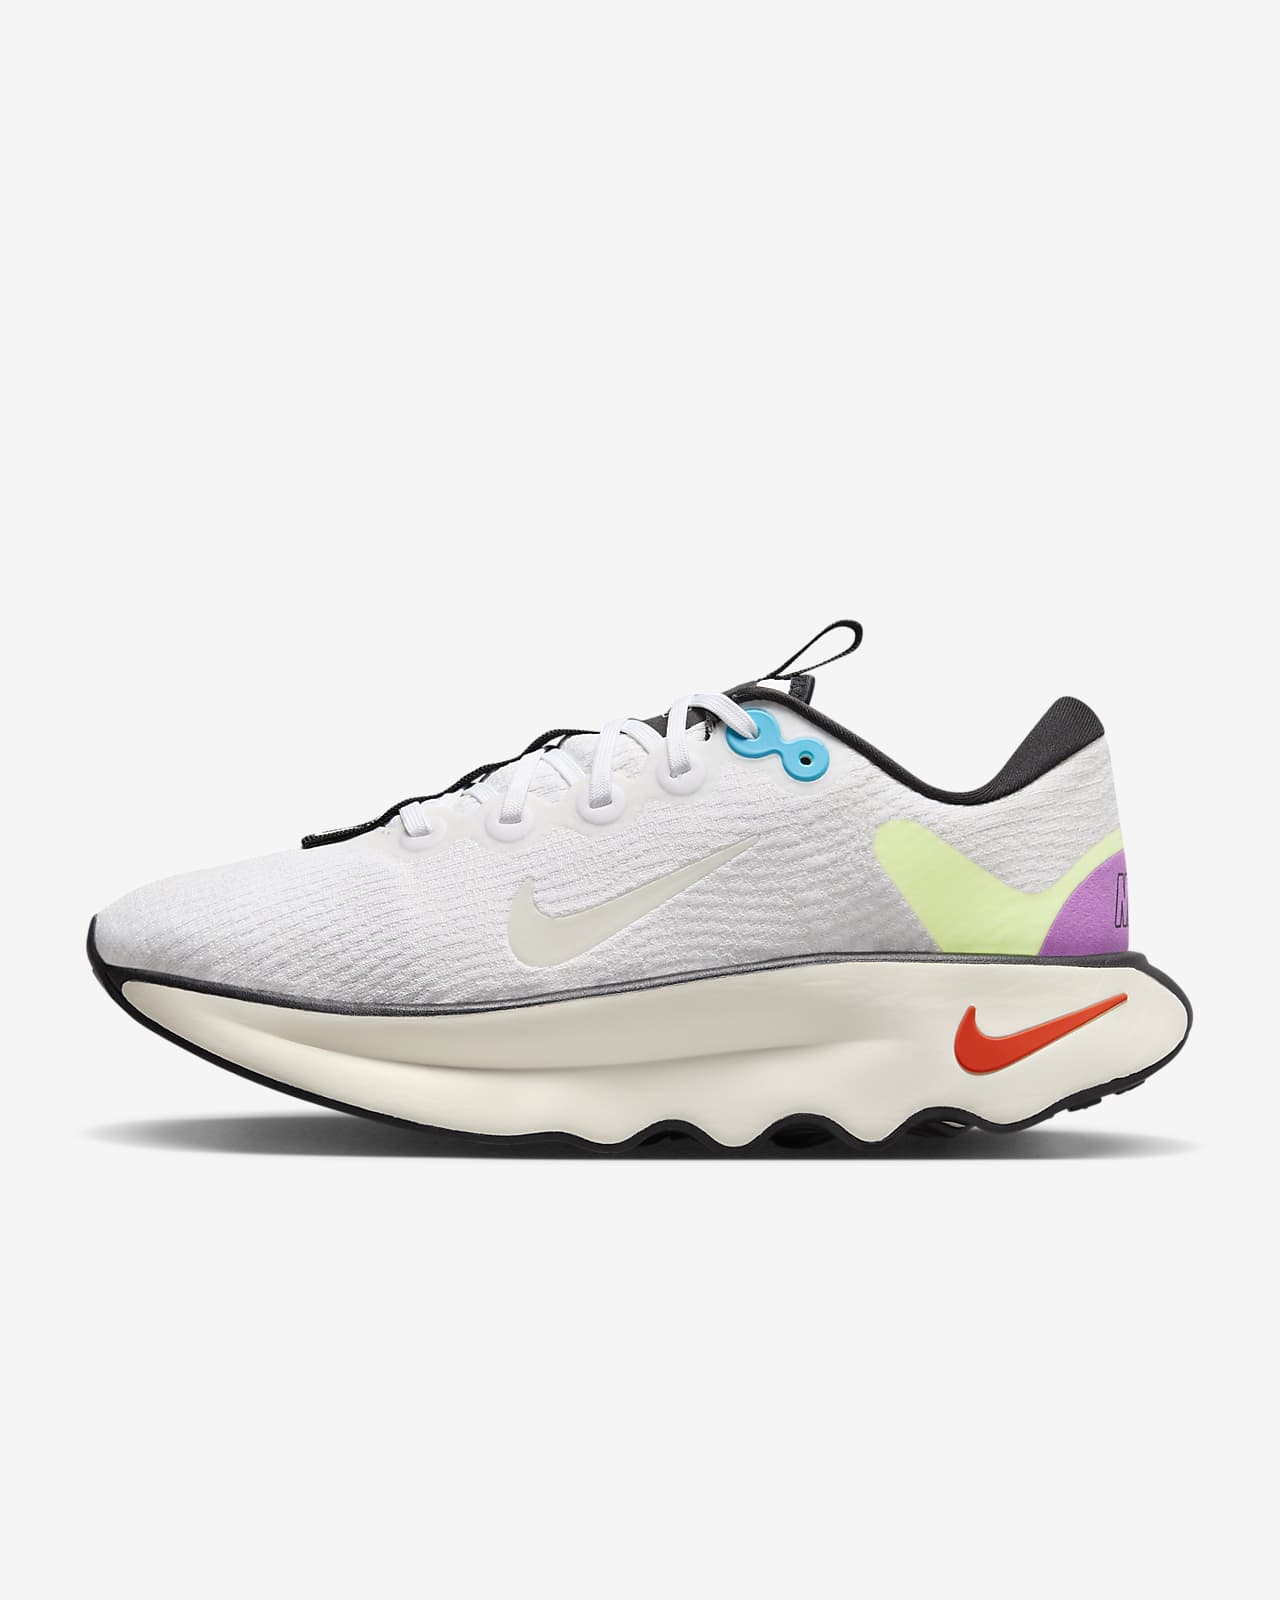 Nike Motiva SE Men's Premium Walking Shoes